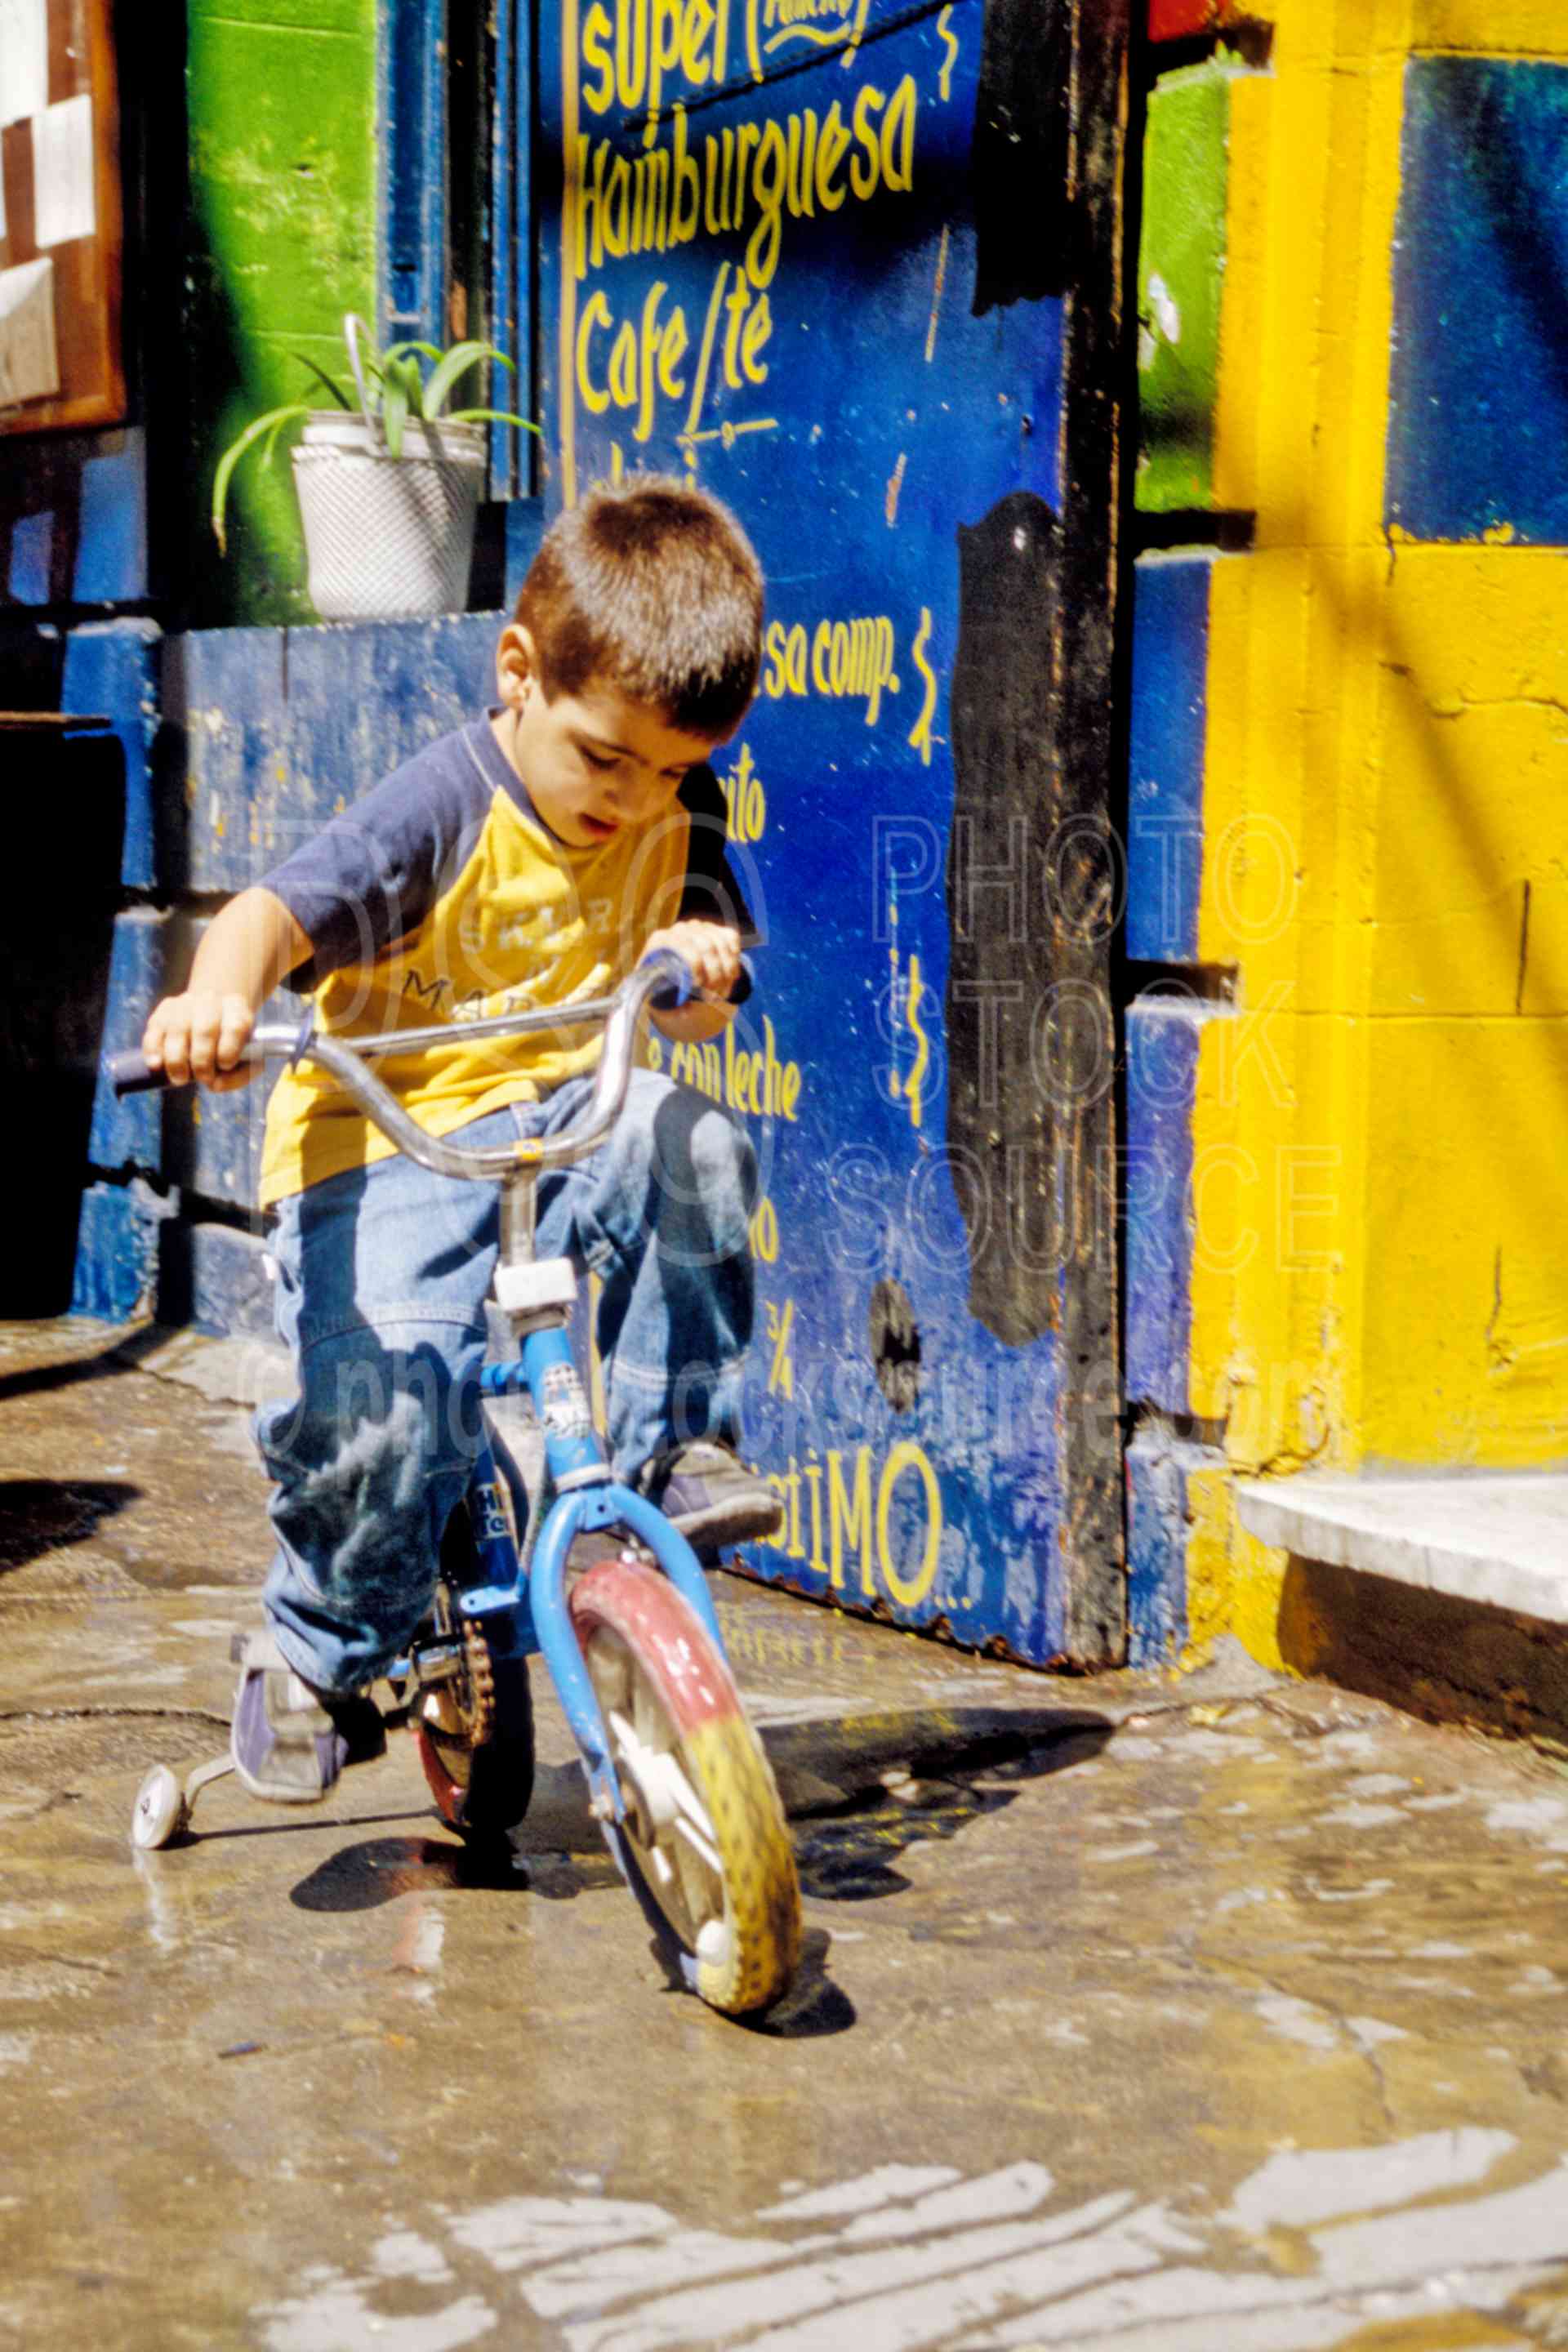 Boy on Training Bike,bike,boys,bicycle,playing,children